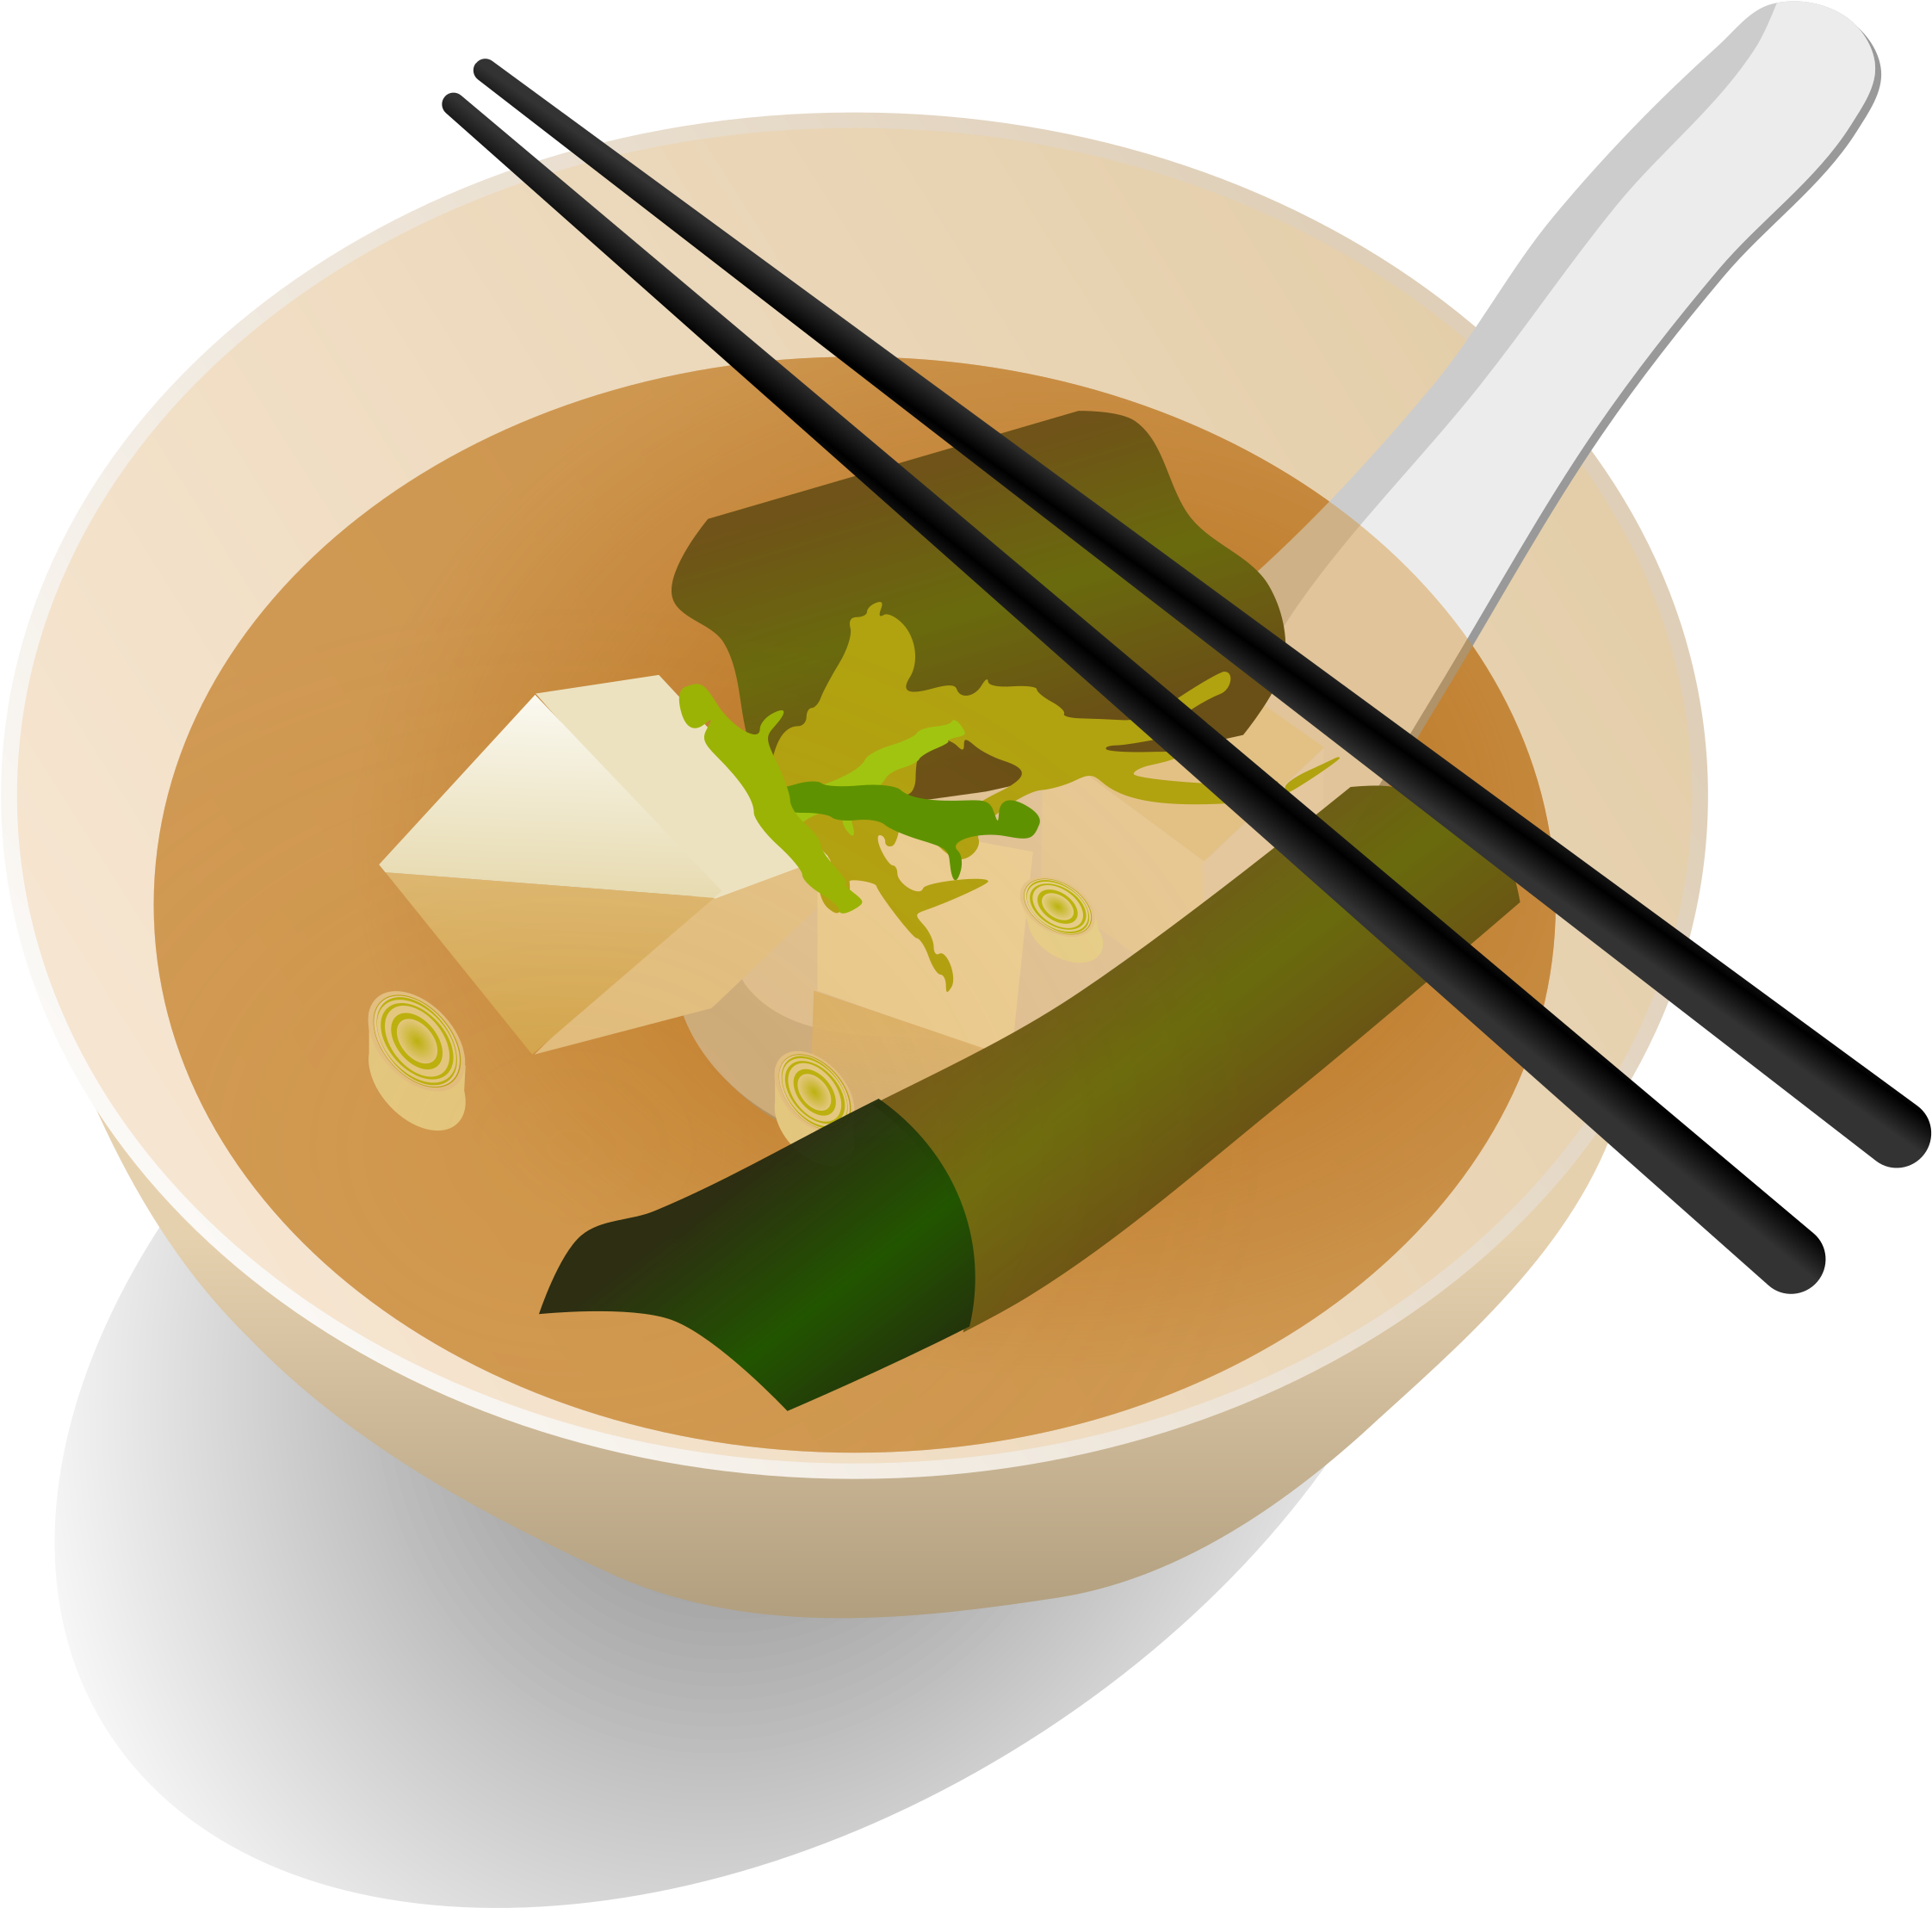 Clipart de dessin animé de nourriture chinoise, nourriture chinoise